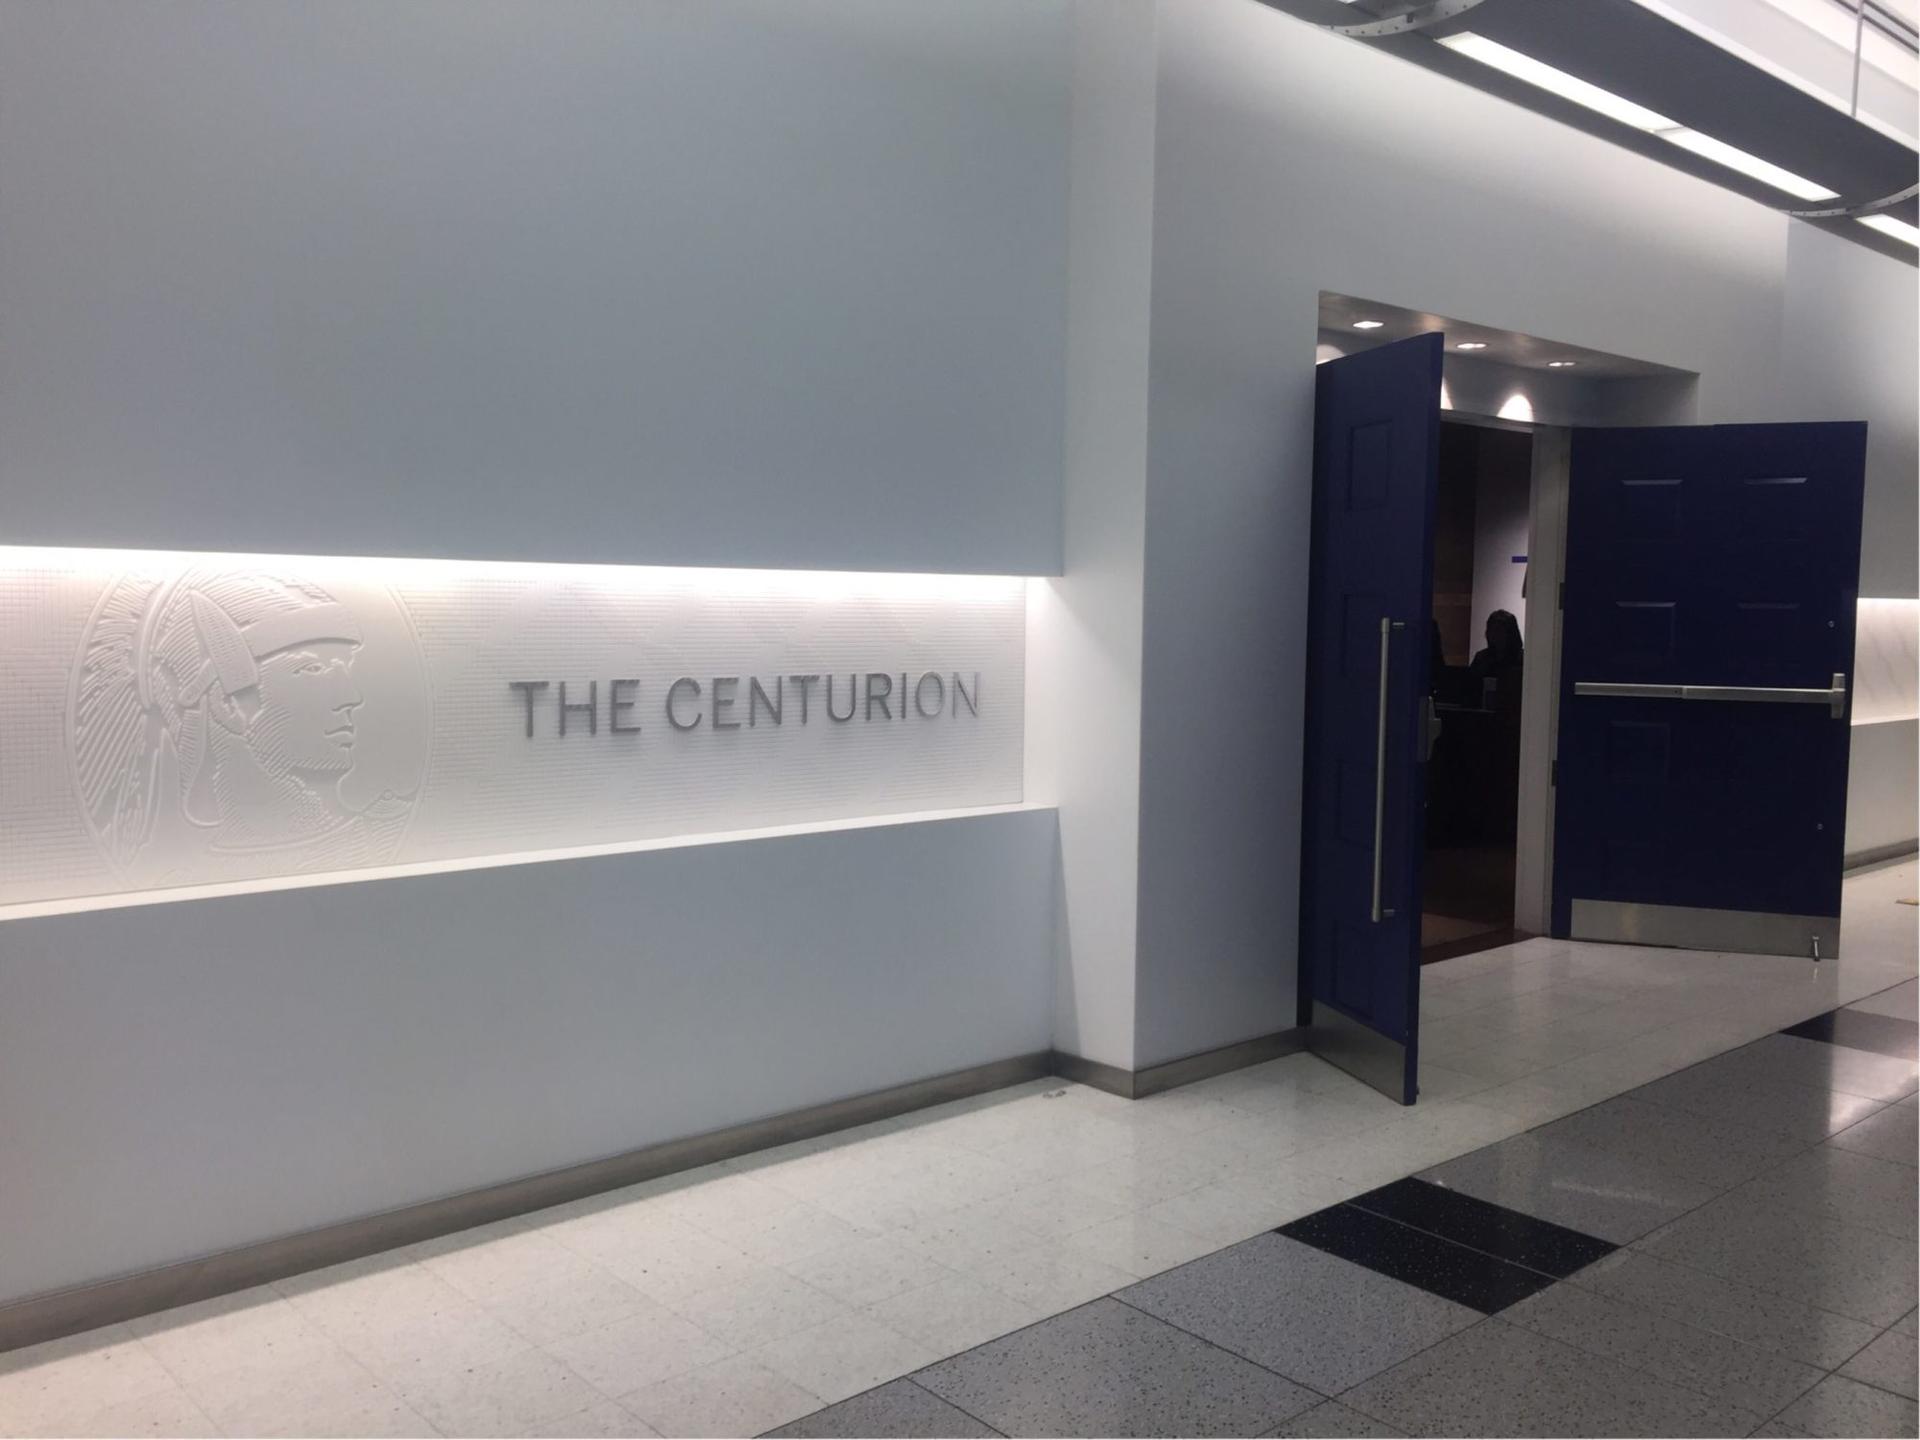 The Centurion Lounge image 39 of 100